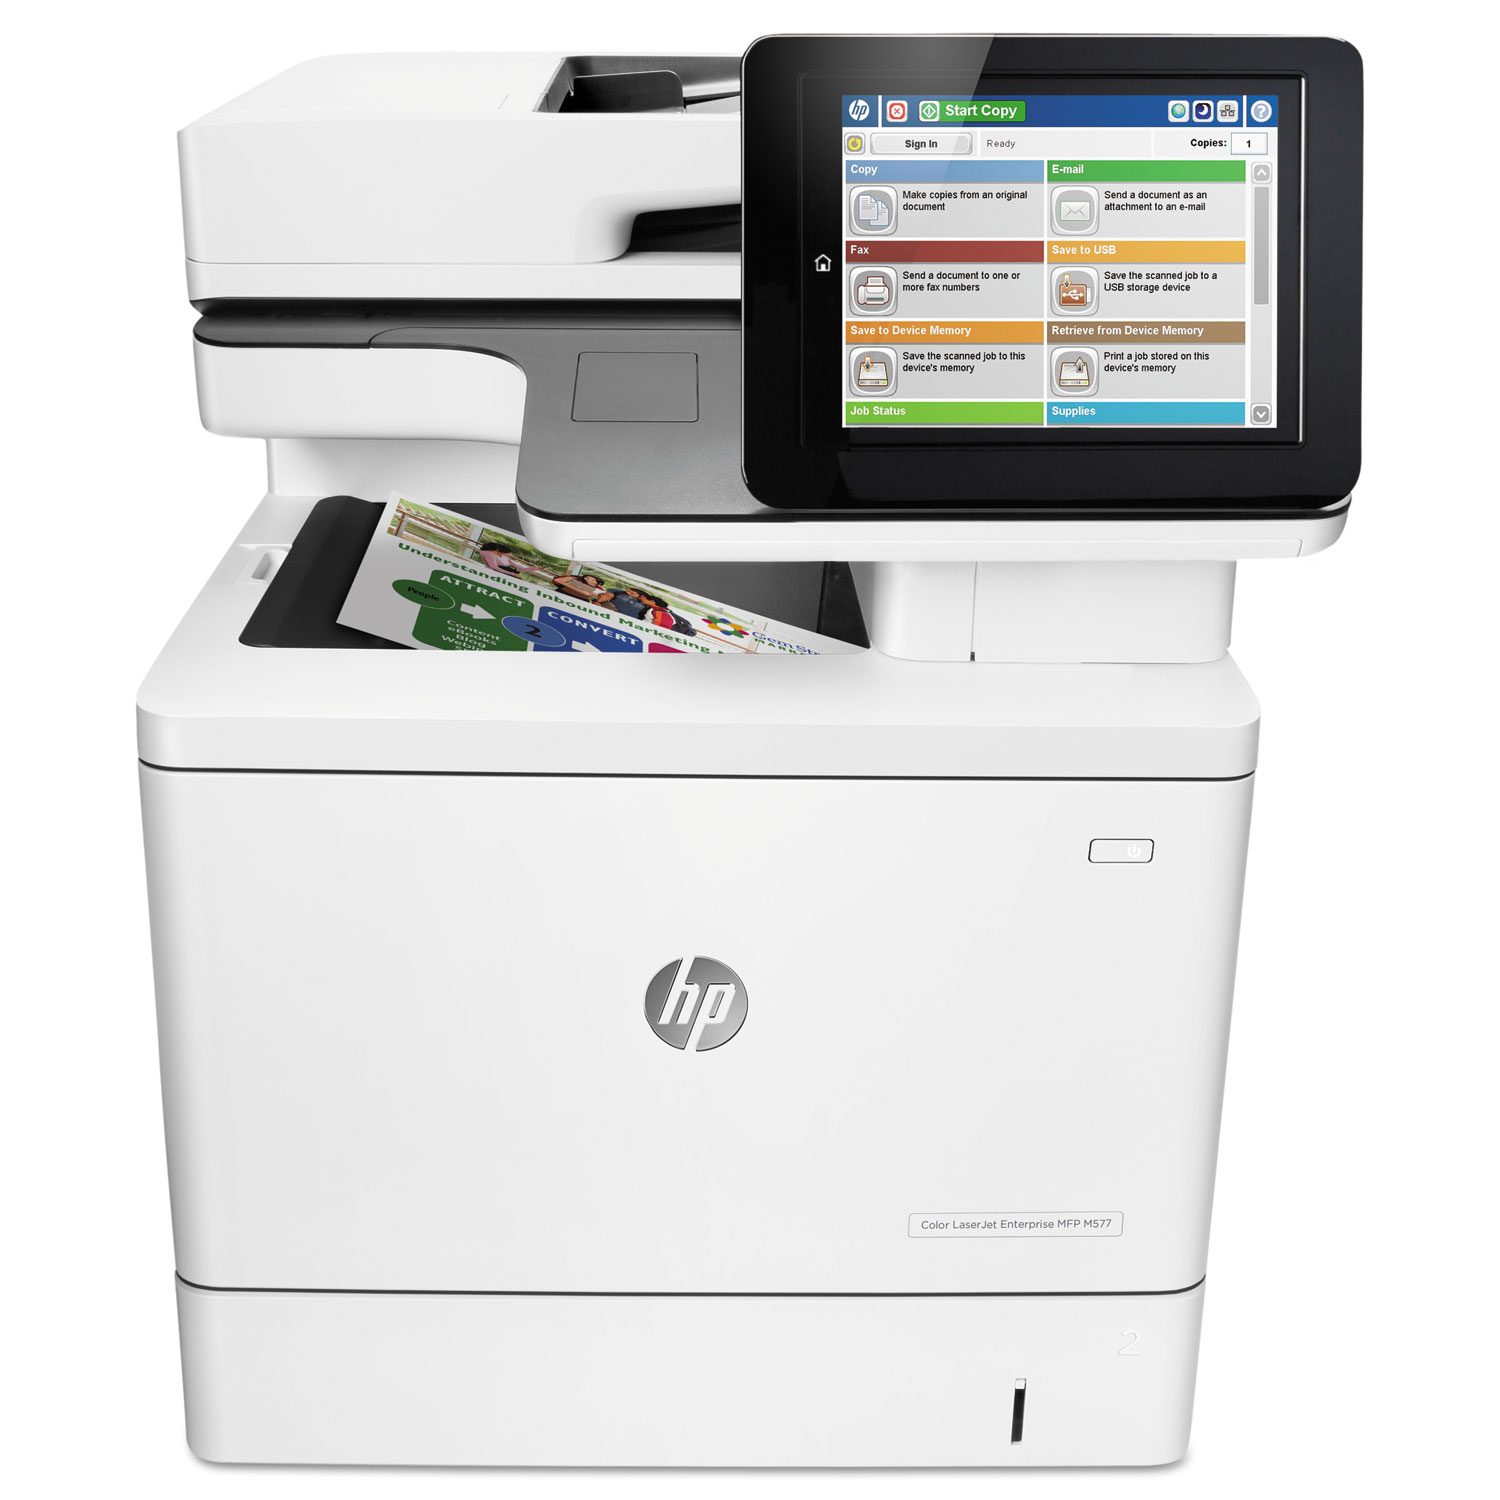 purchase-color-laserjet-enterprise-mfp-m577-series-and-other-copier-fax